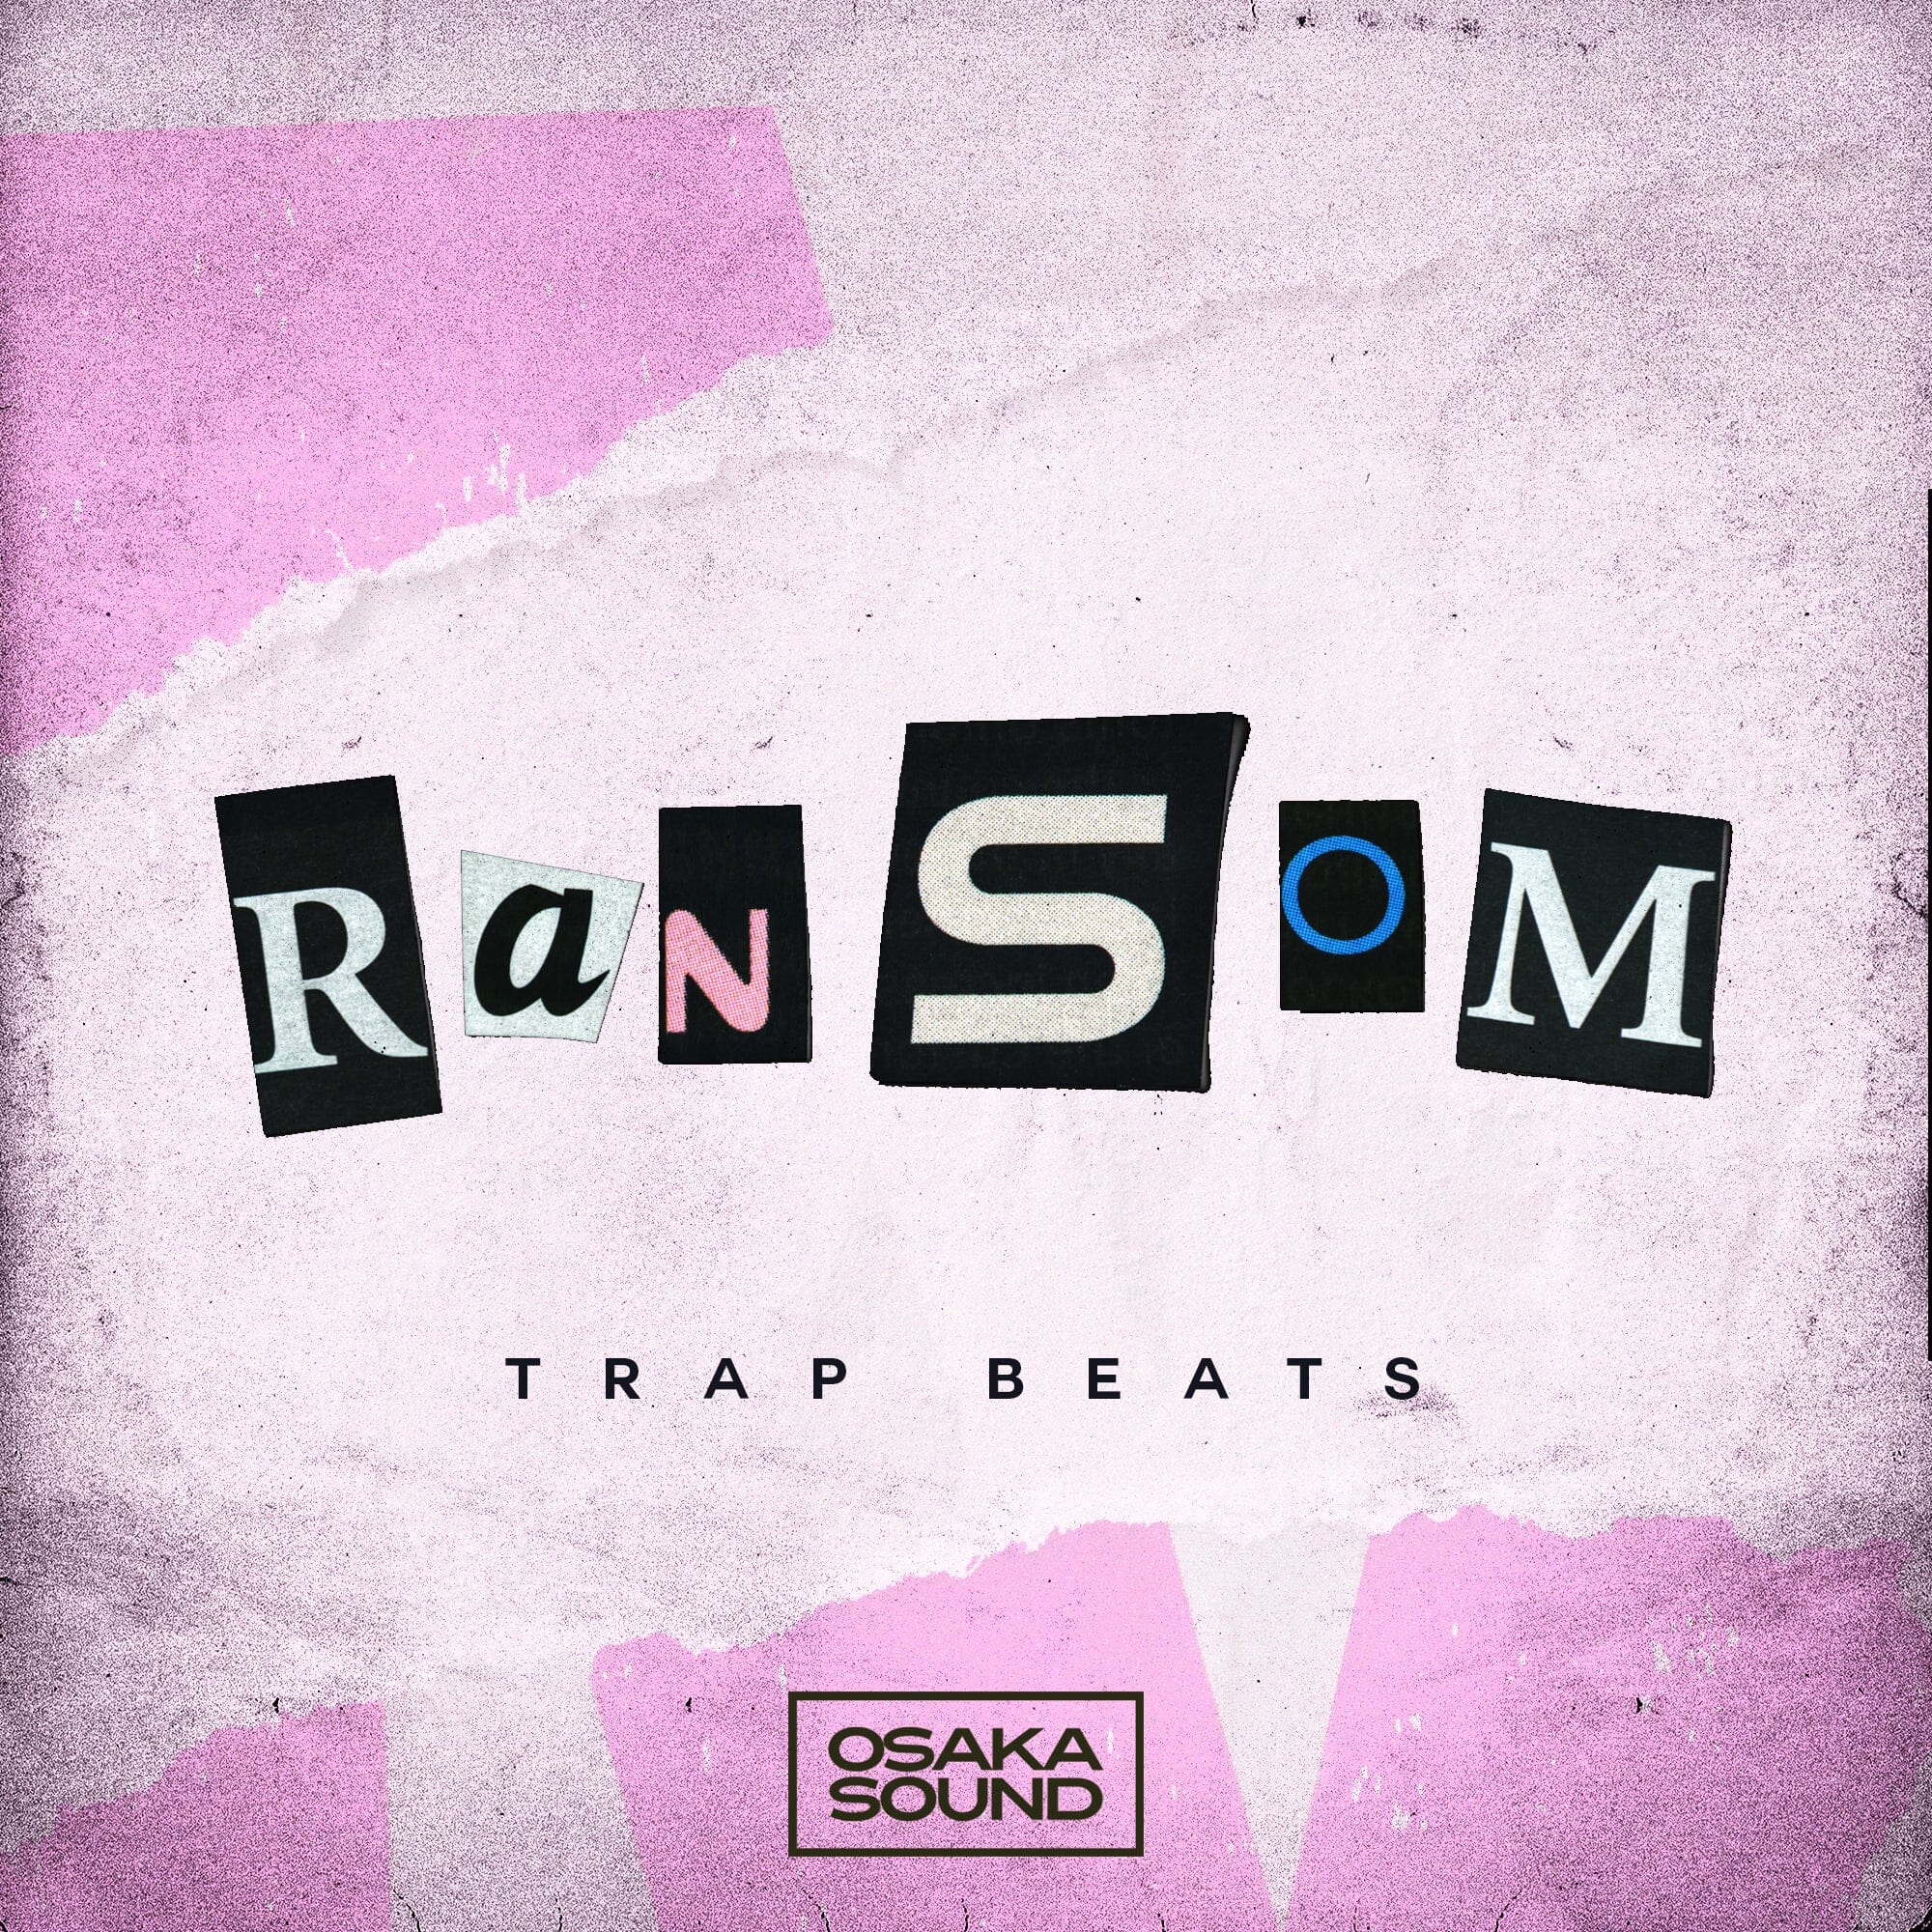 Ransom - Trap Beats (Drum Loops - 808 Loops - FX) Sample Pack Osaka Sound